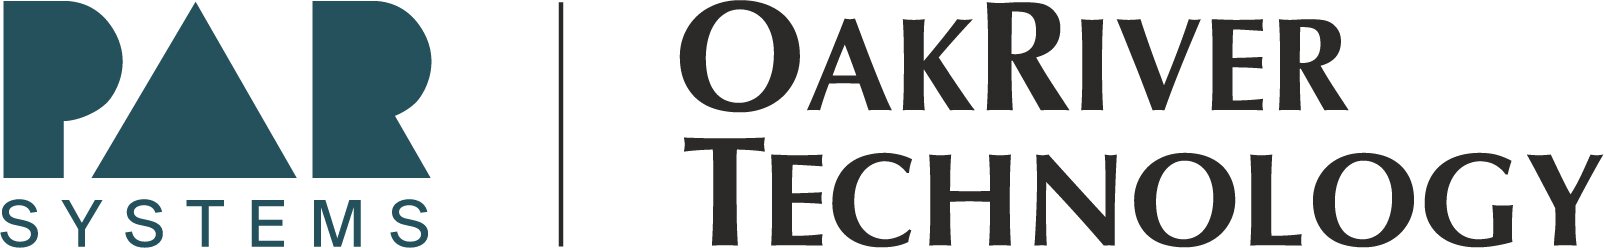 PAR Systems and OakRiver Technology logo